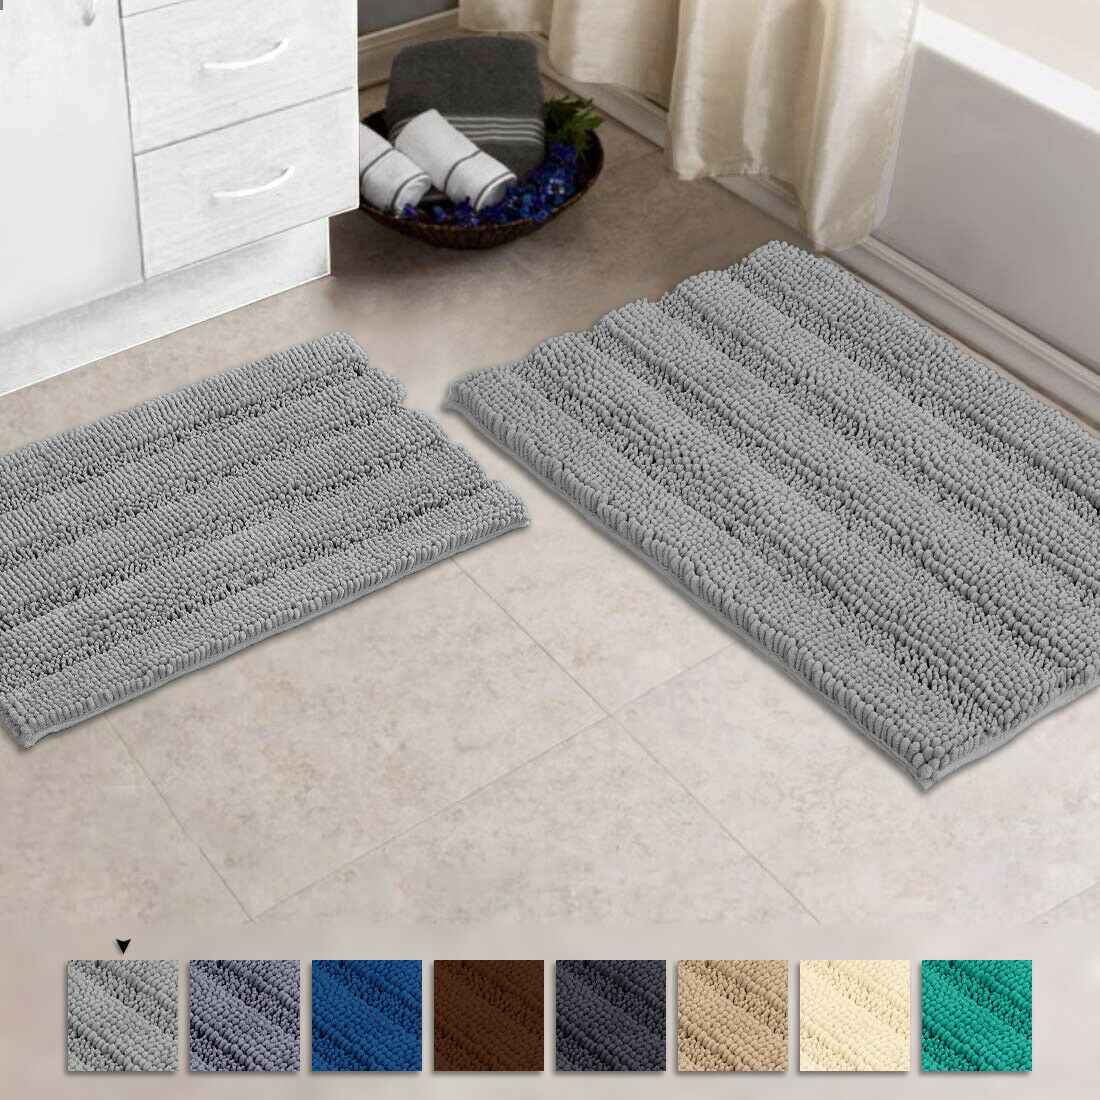 15X23" blue eyes cat Kitchen Bathroom Floor Non-Slip Bath Mat Rug Carpet 